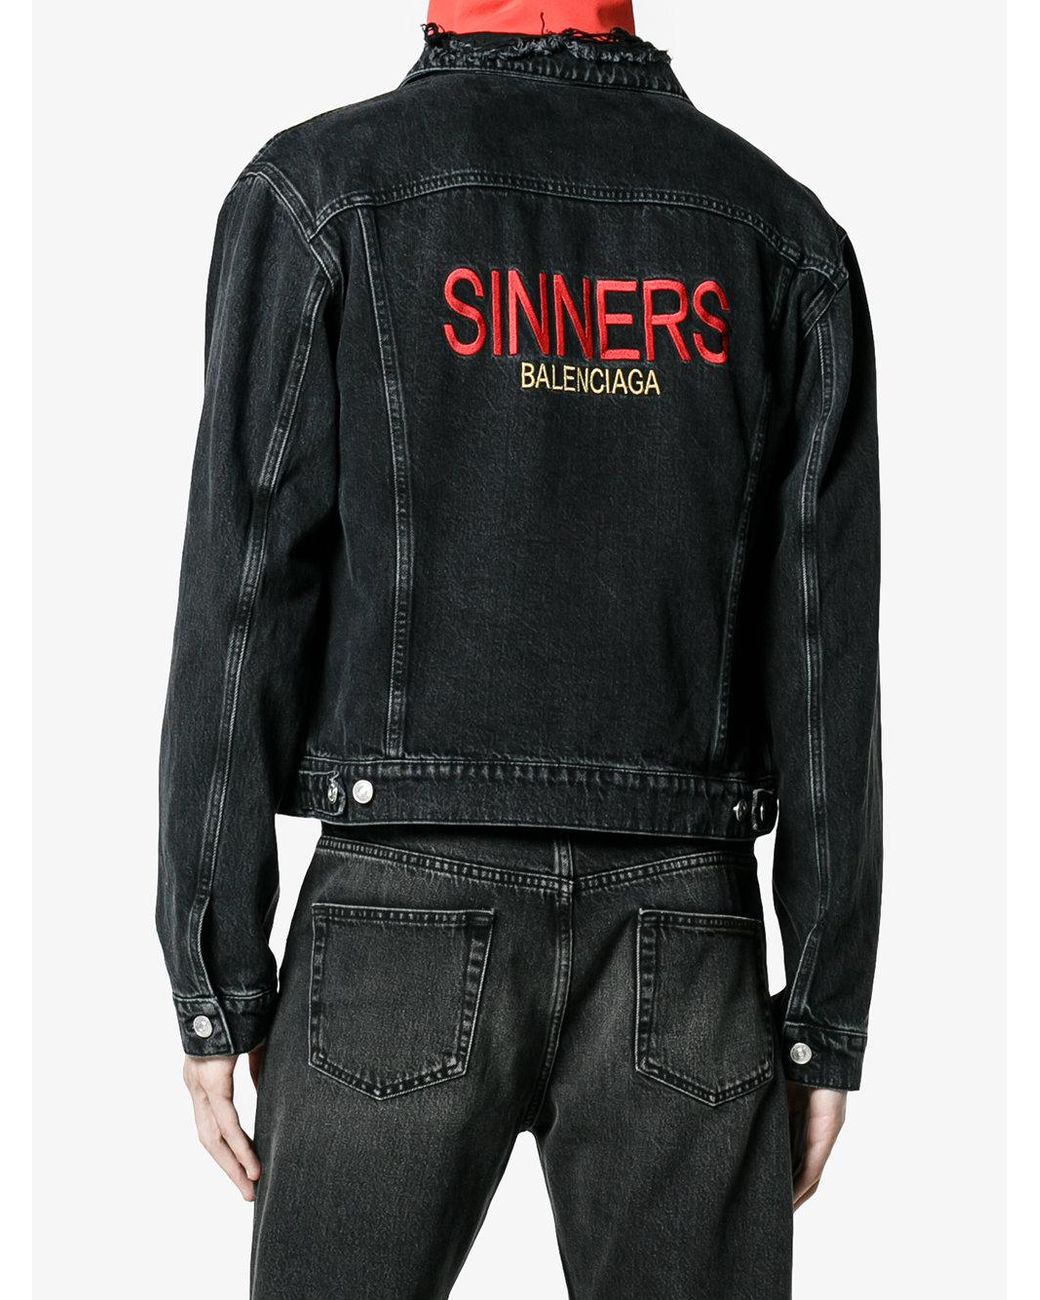 Balenciaga Sinners Denim Jacket Black Men |